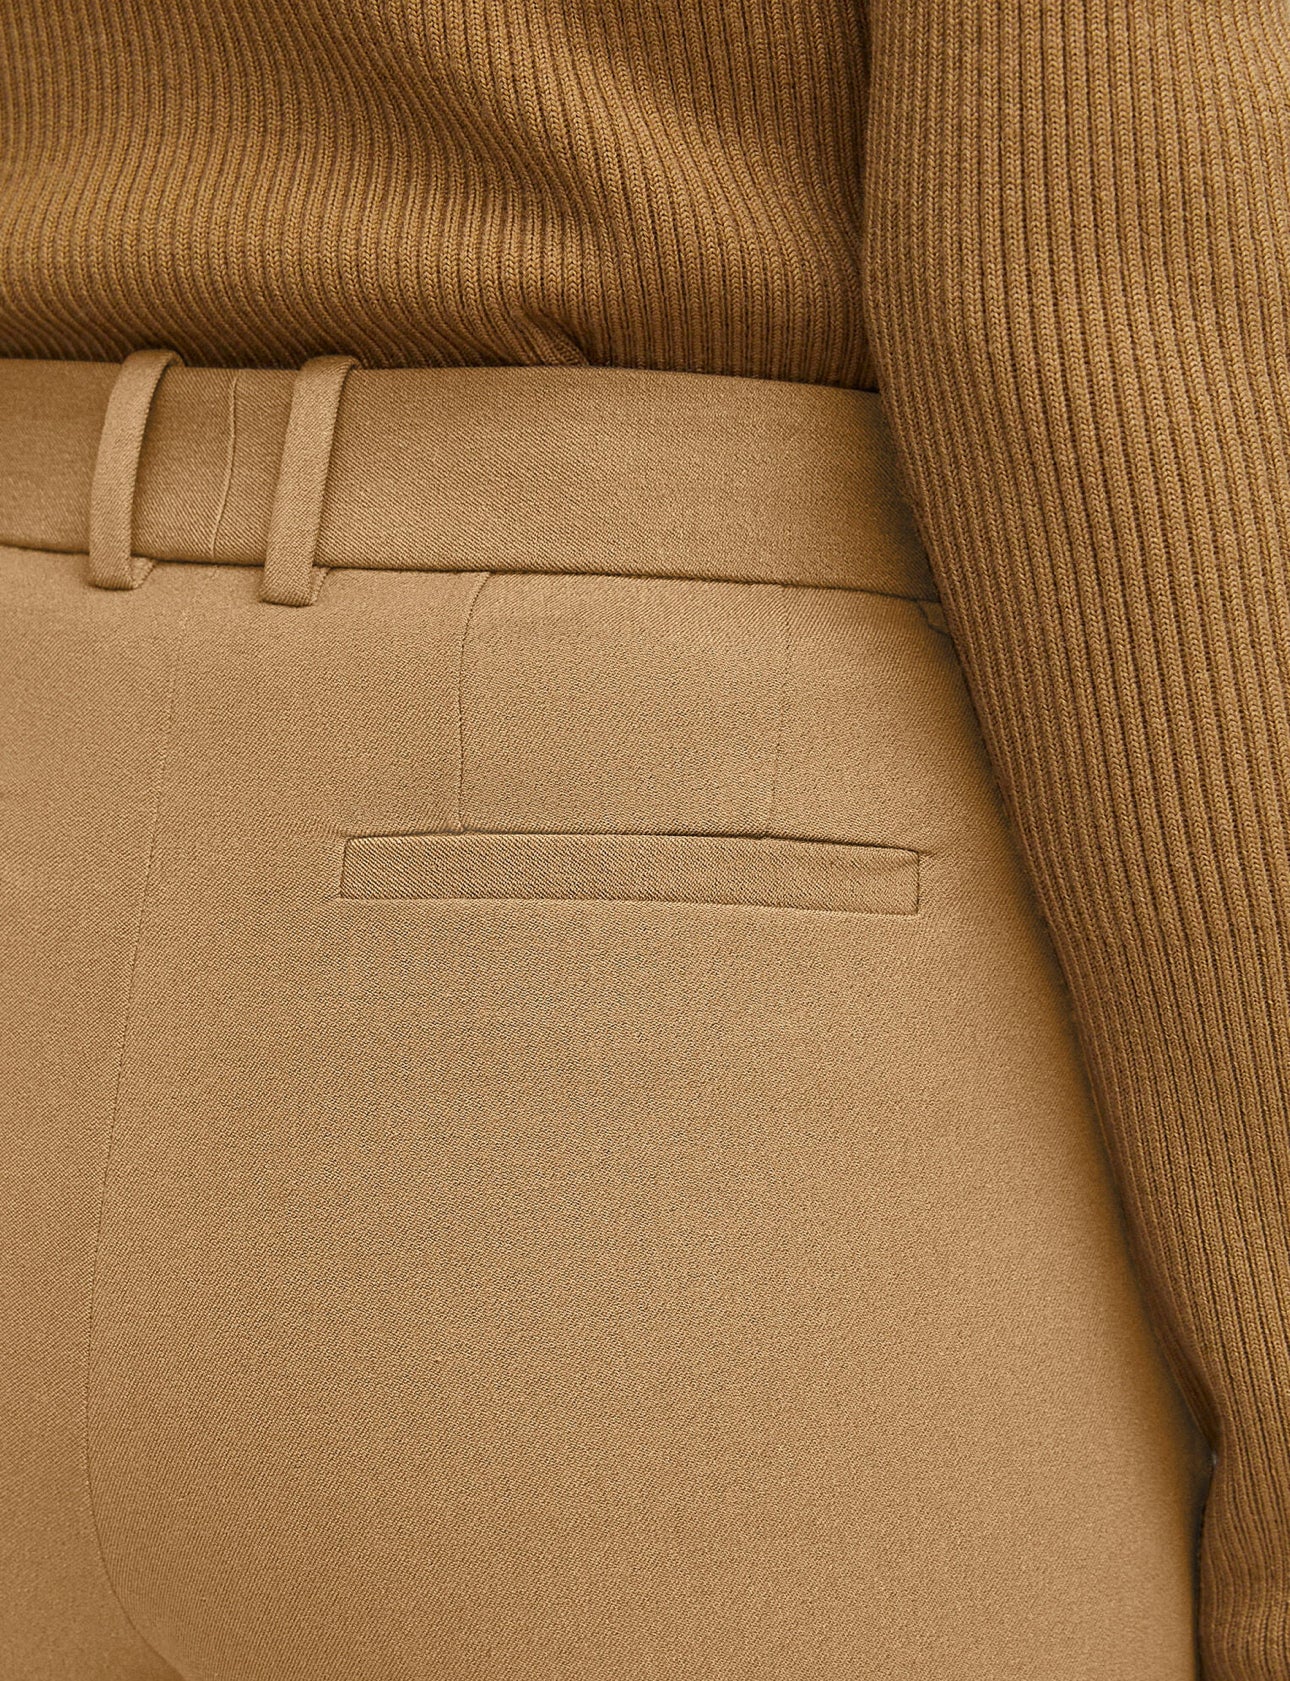 Joseph - Coleman pants tailor wool stretch